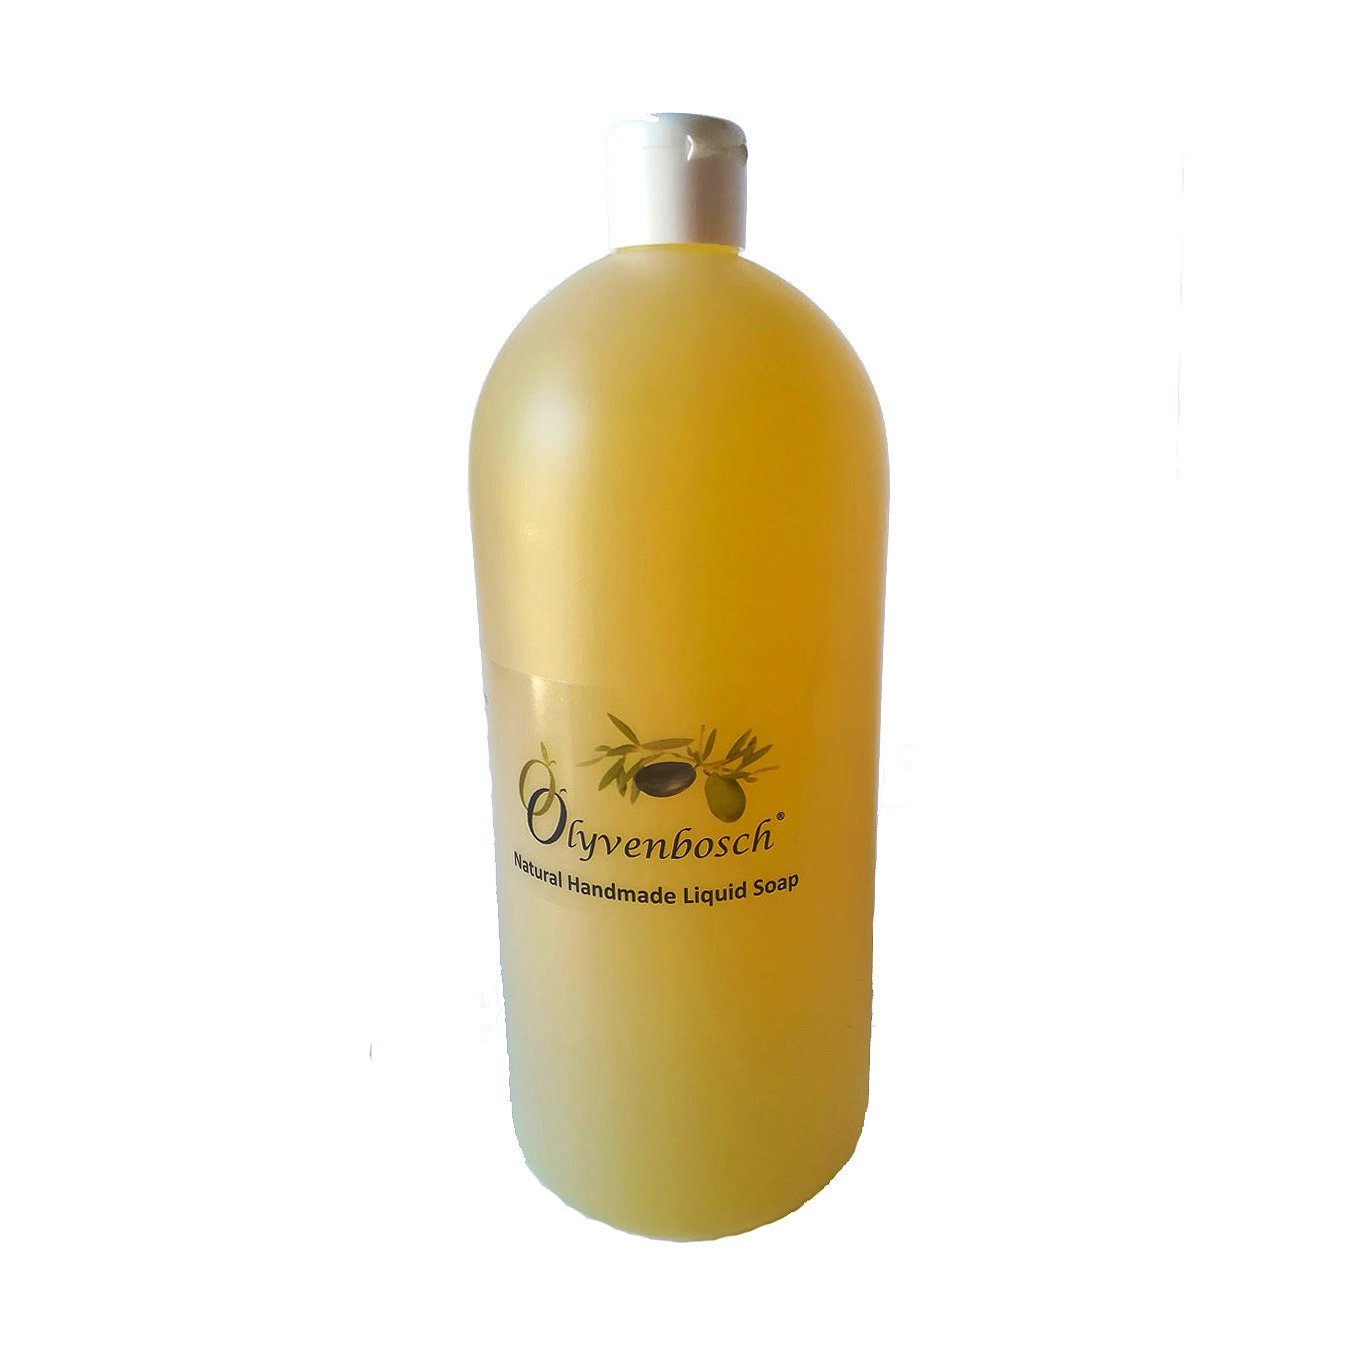 Olyvenbosch Pure Olive Oil Liquid Soap health & body Olyvenbosch Olive Farm 1 litre